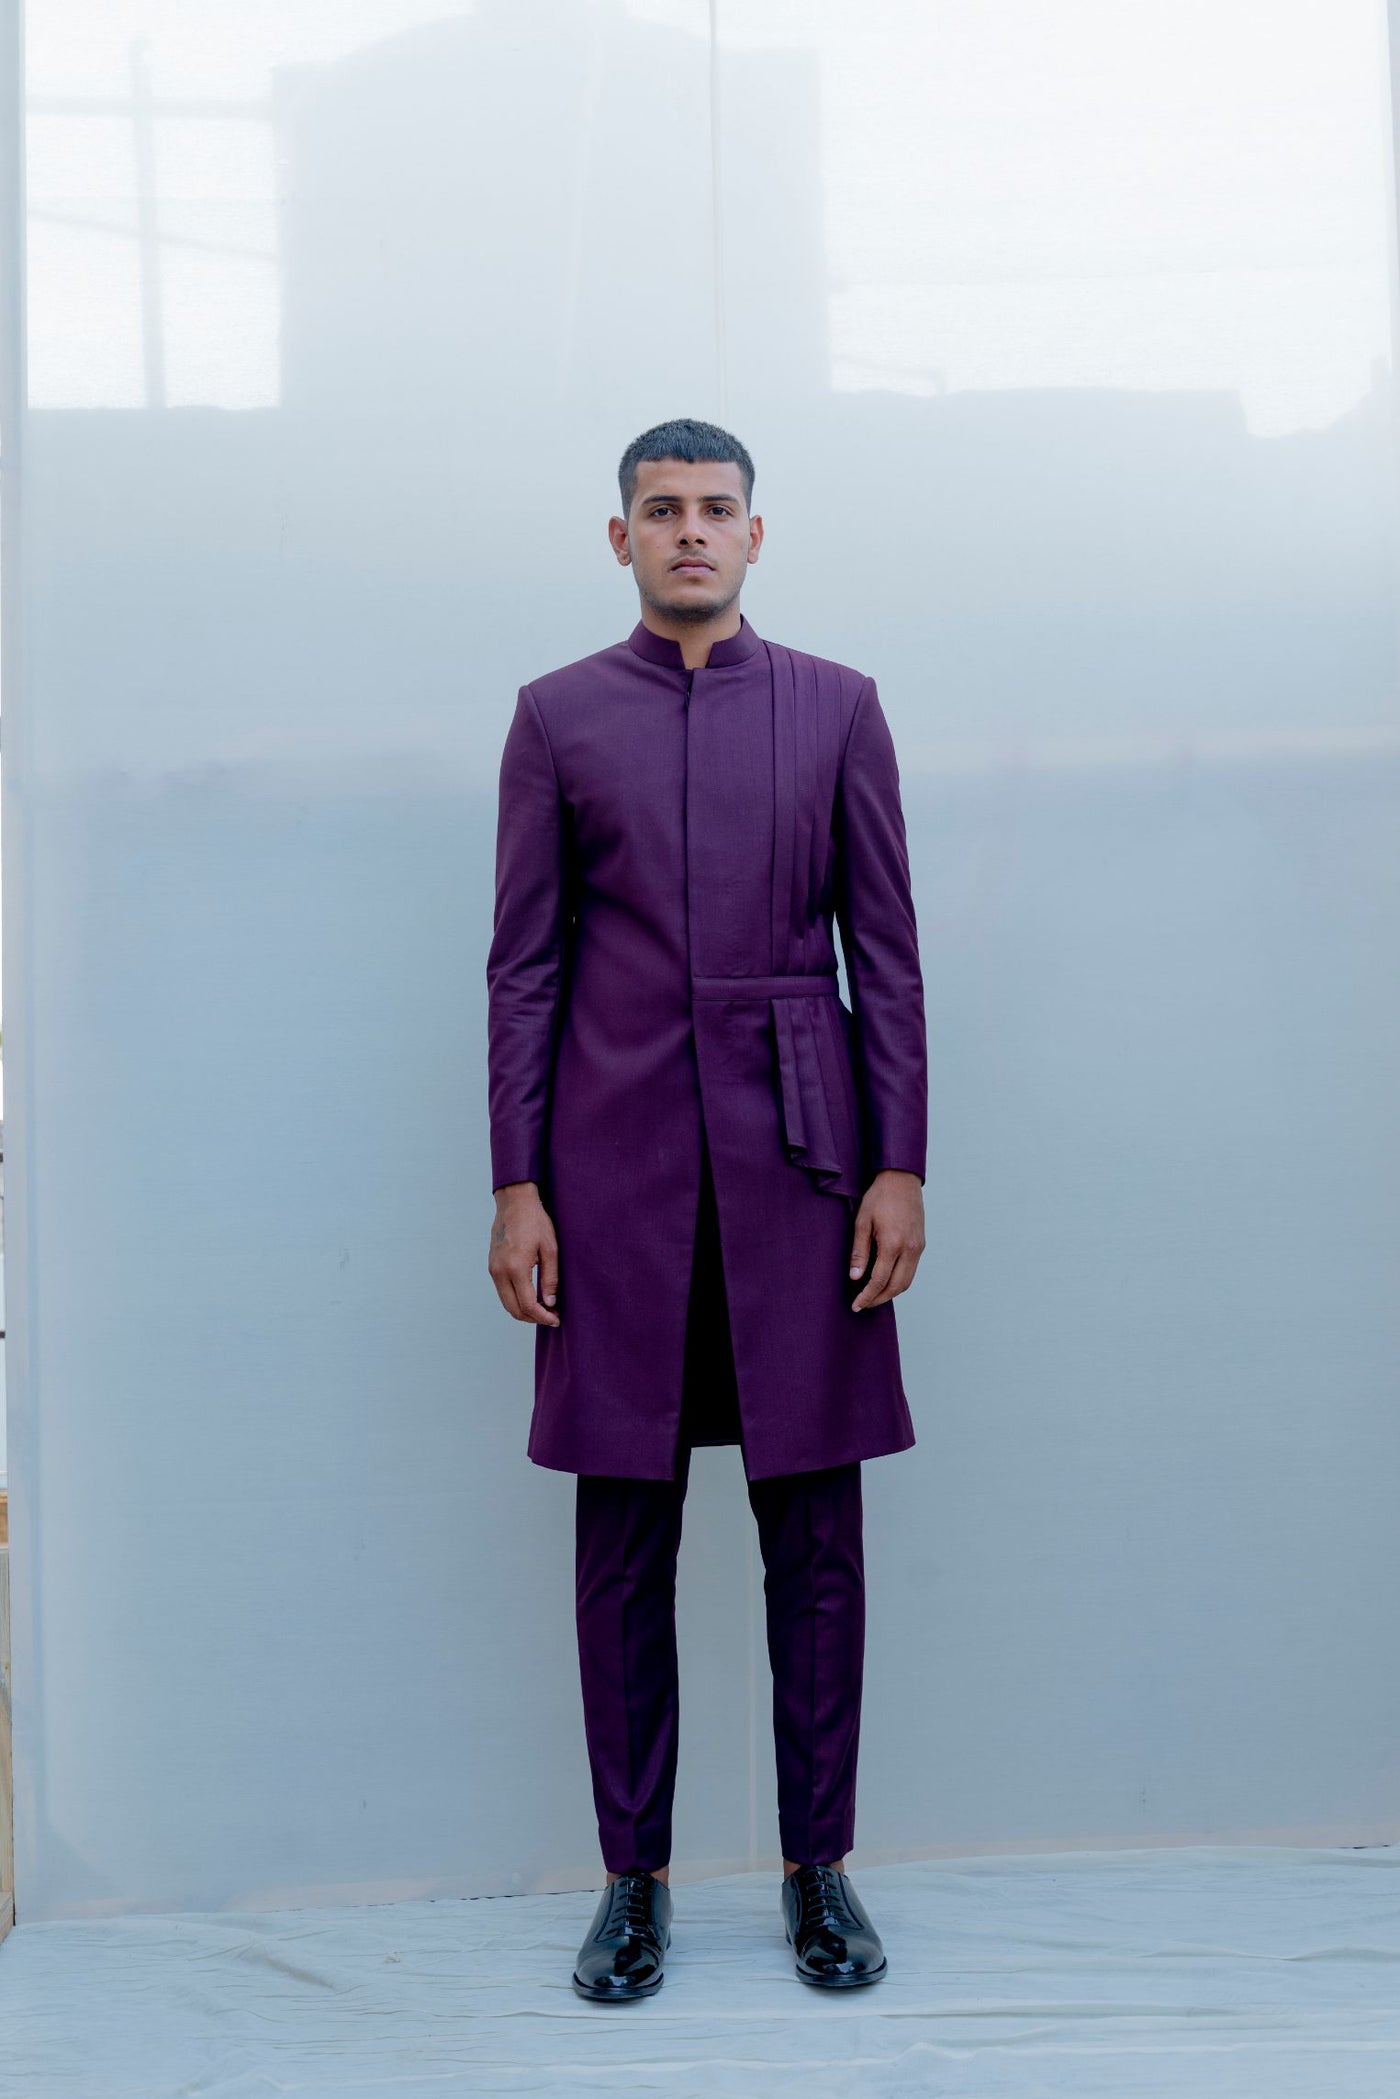 Regal - Purple Indo Western Jacket Set